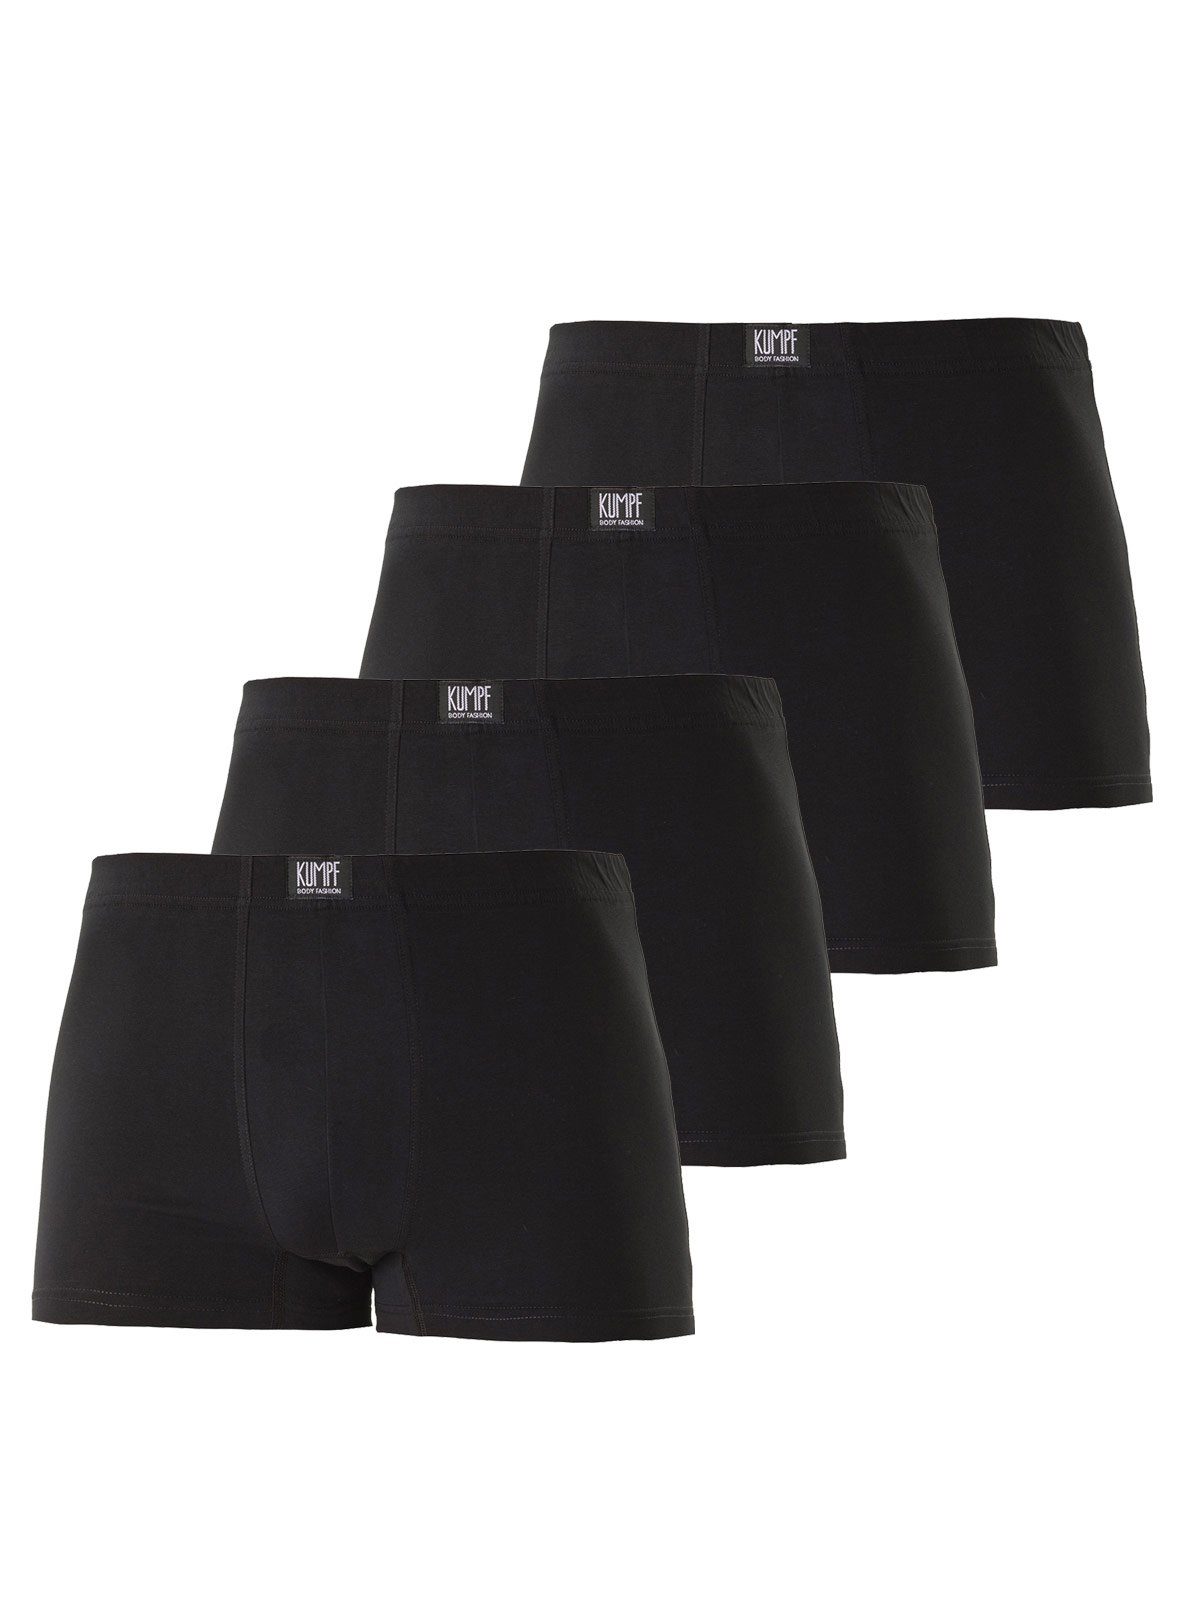 KUMPF Retro Pants 4er Sparpack Herren Pants Bio Cotton (Spar-Set, 4-St) hohe Markenqualität schwarz